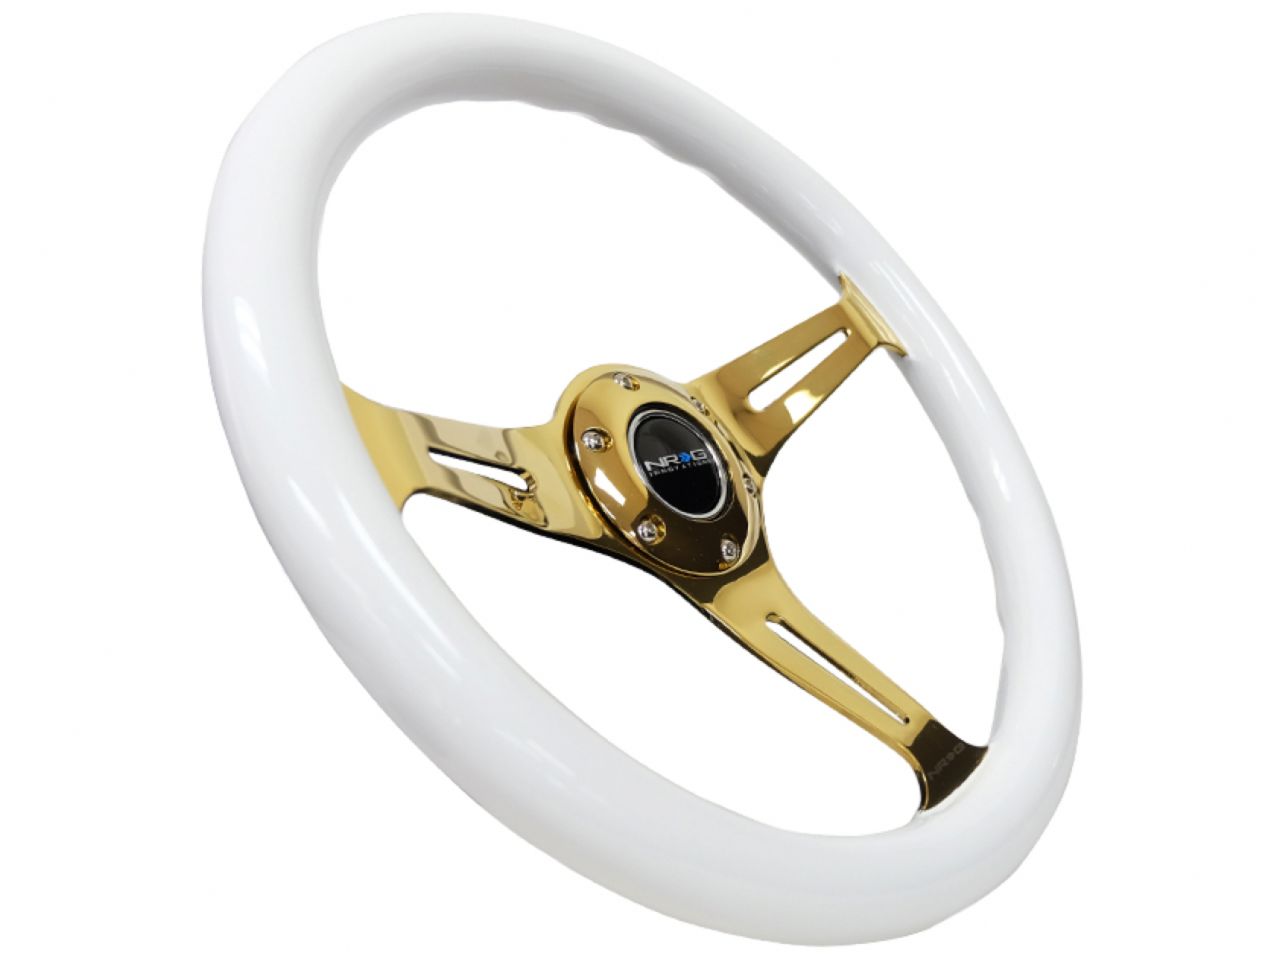 NRG Classic Wood Grain Wheel - 350mm 3 Chrome Gold Spokes - White Grip